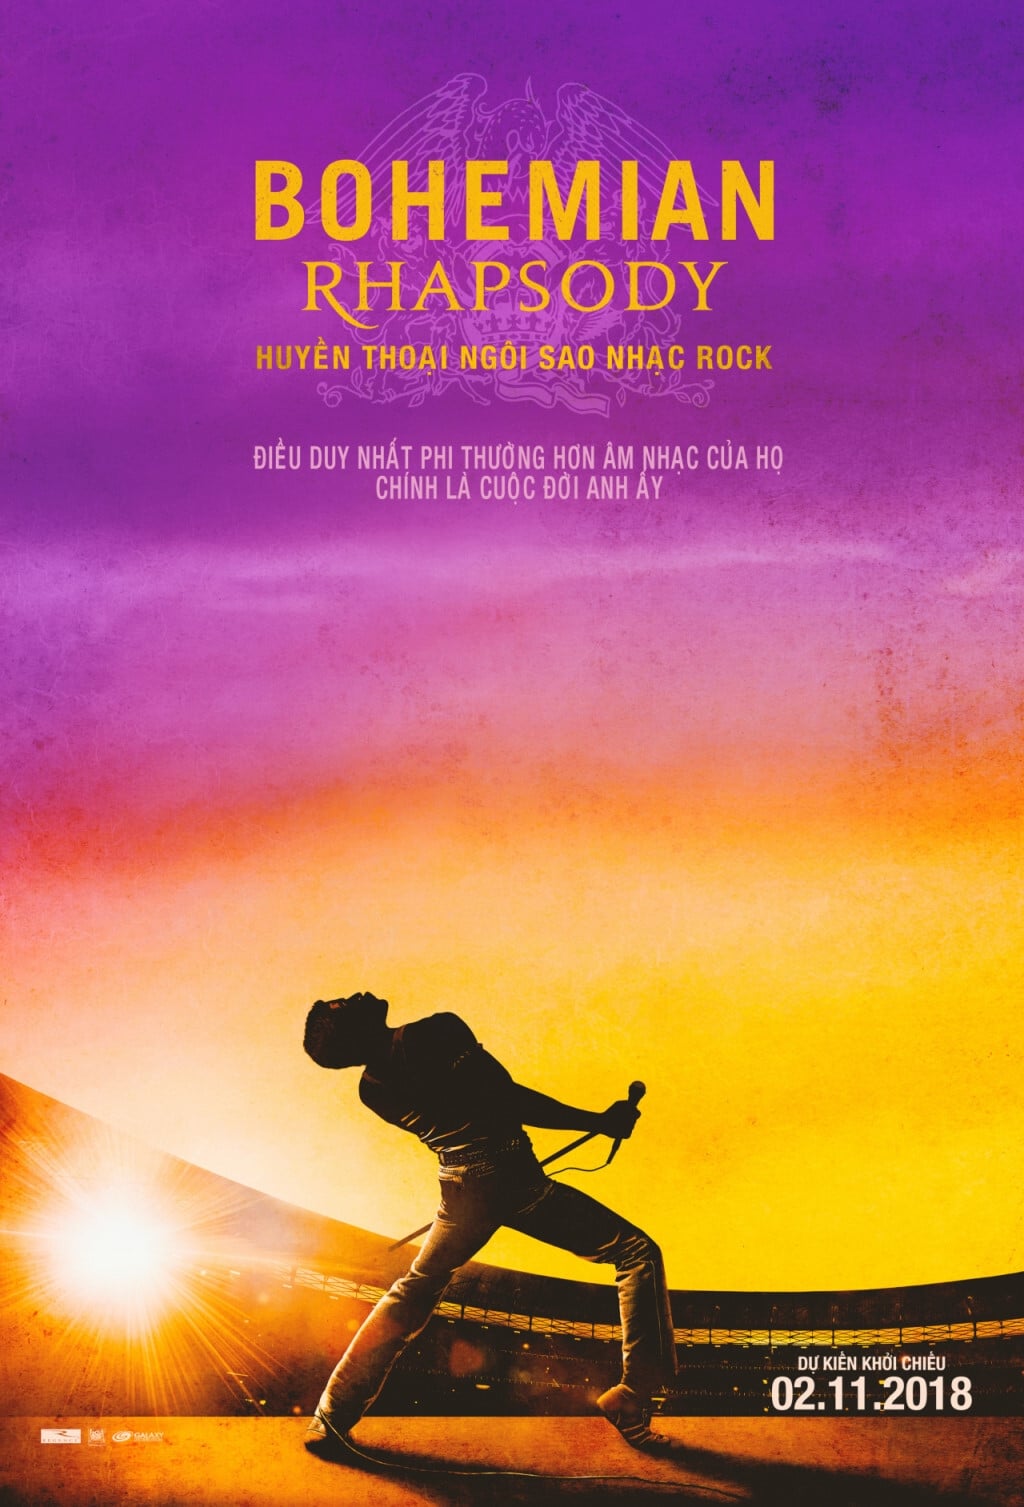 Bohemian Rhapsody: Huyền Thoại Ngôi Sao Nhạc Rock (Bohemian Rhapsody) [2018]